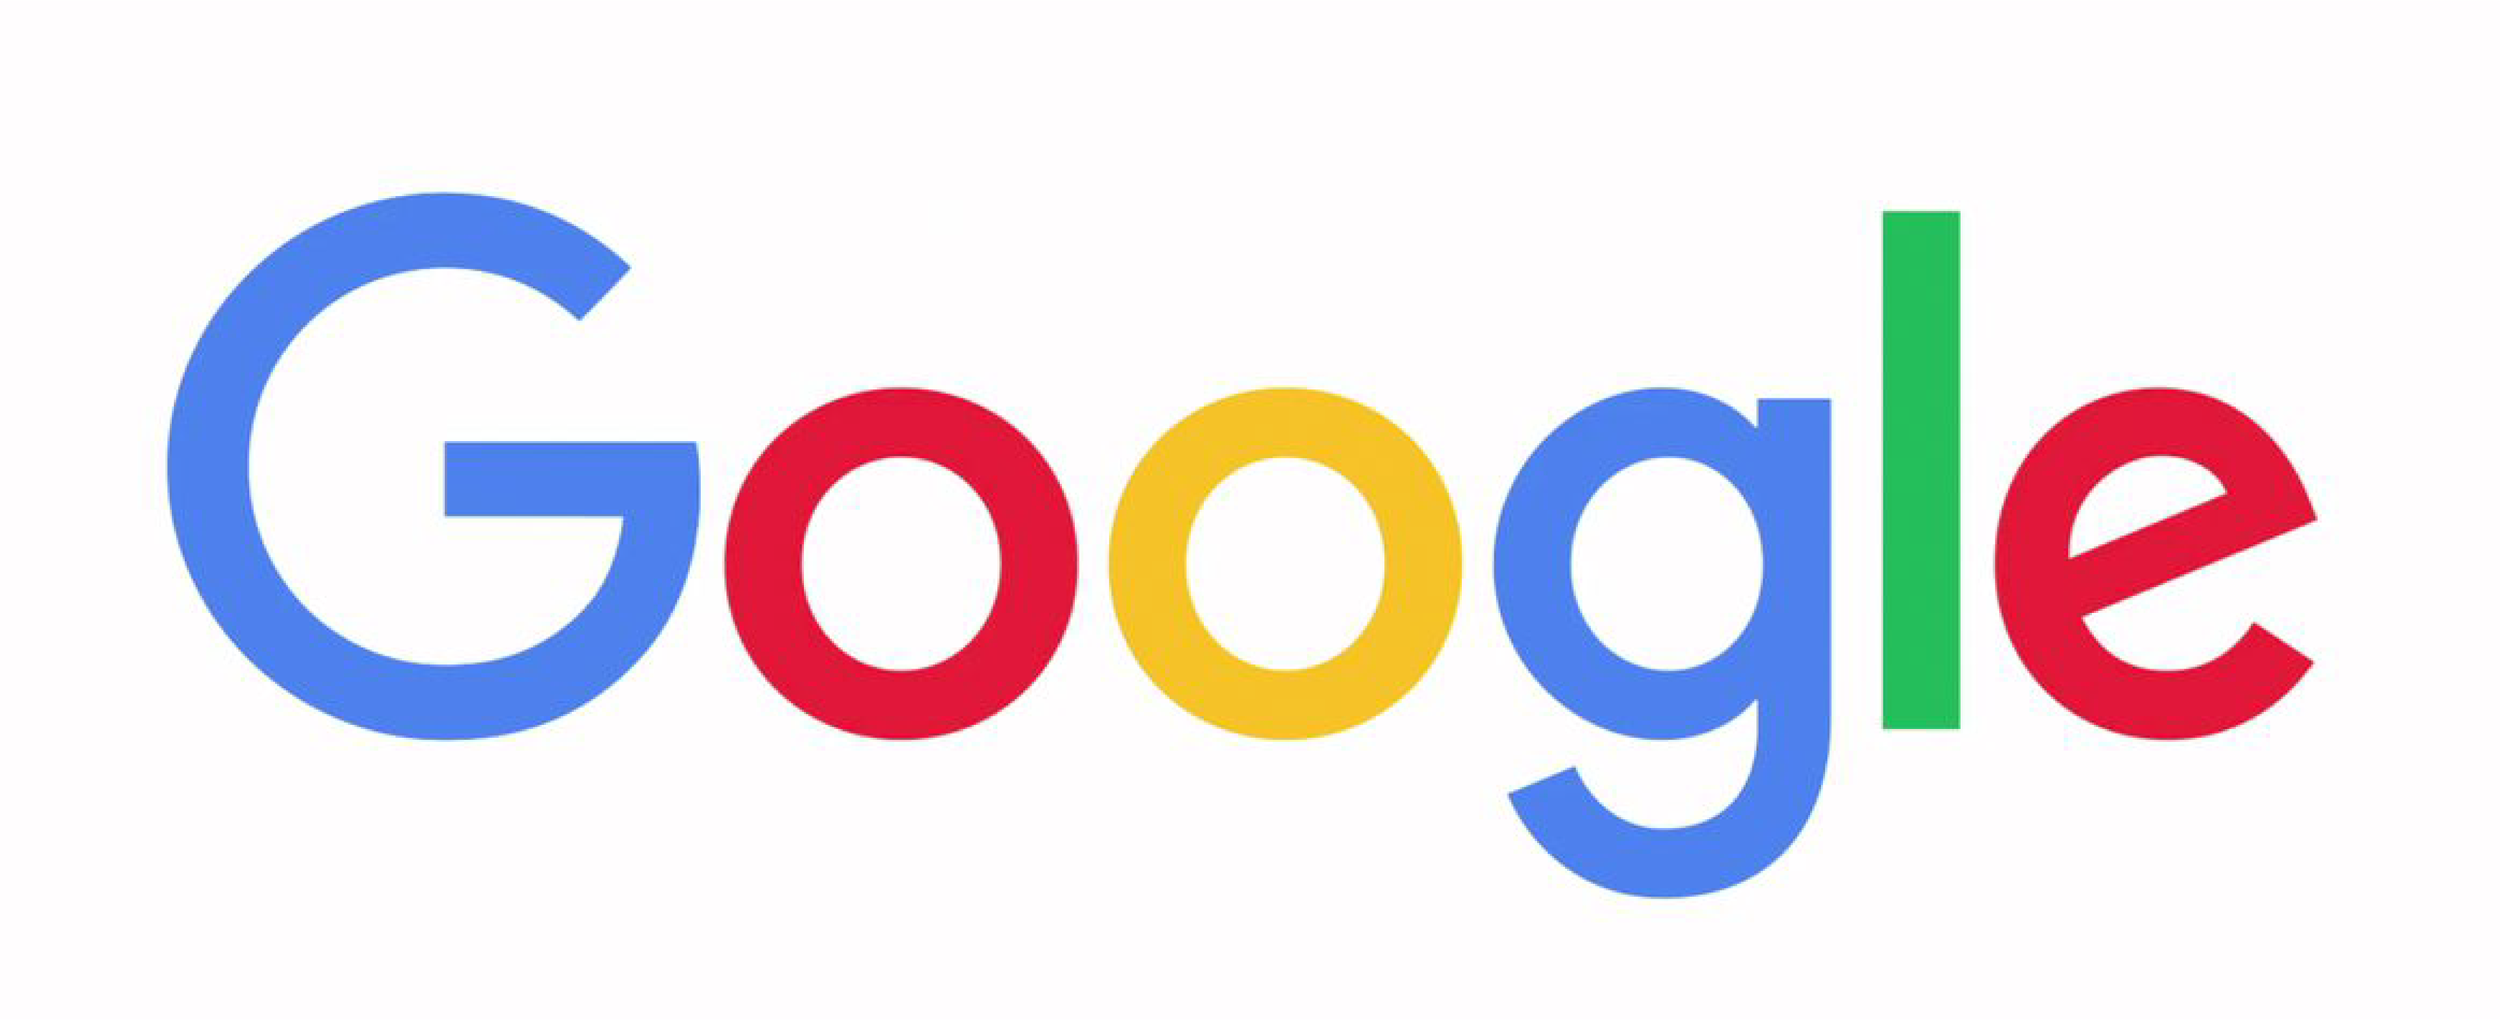 Google Logo_size.png